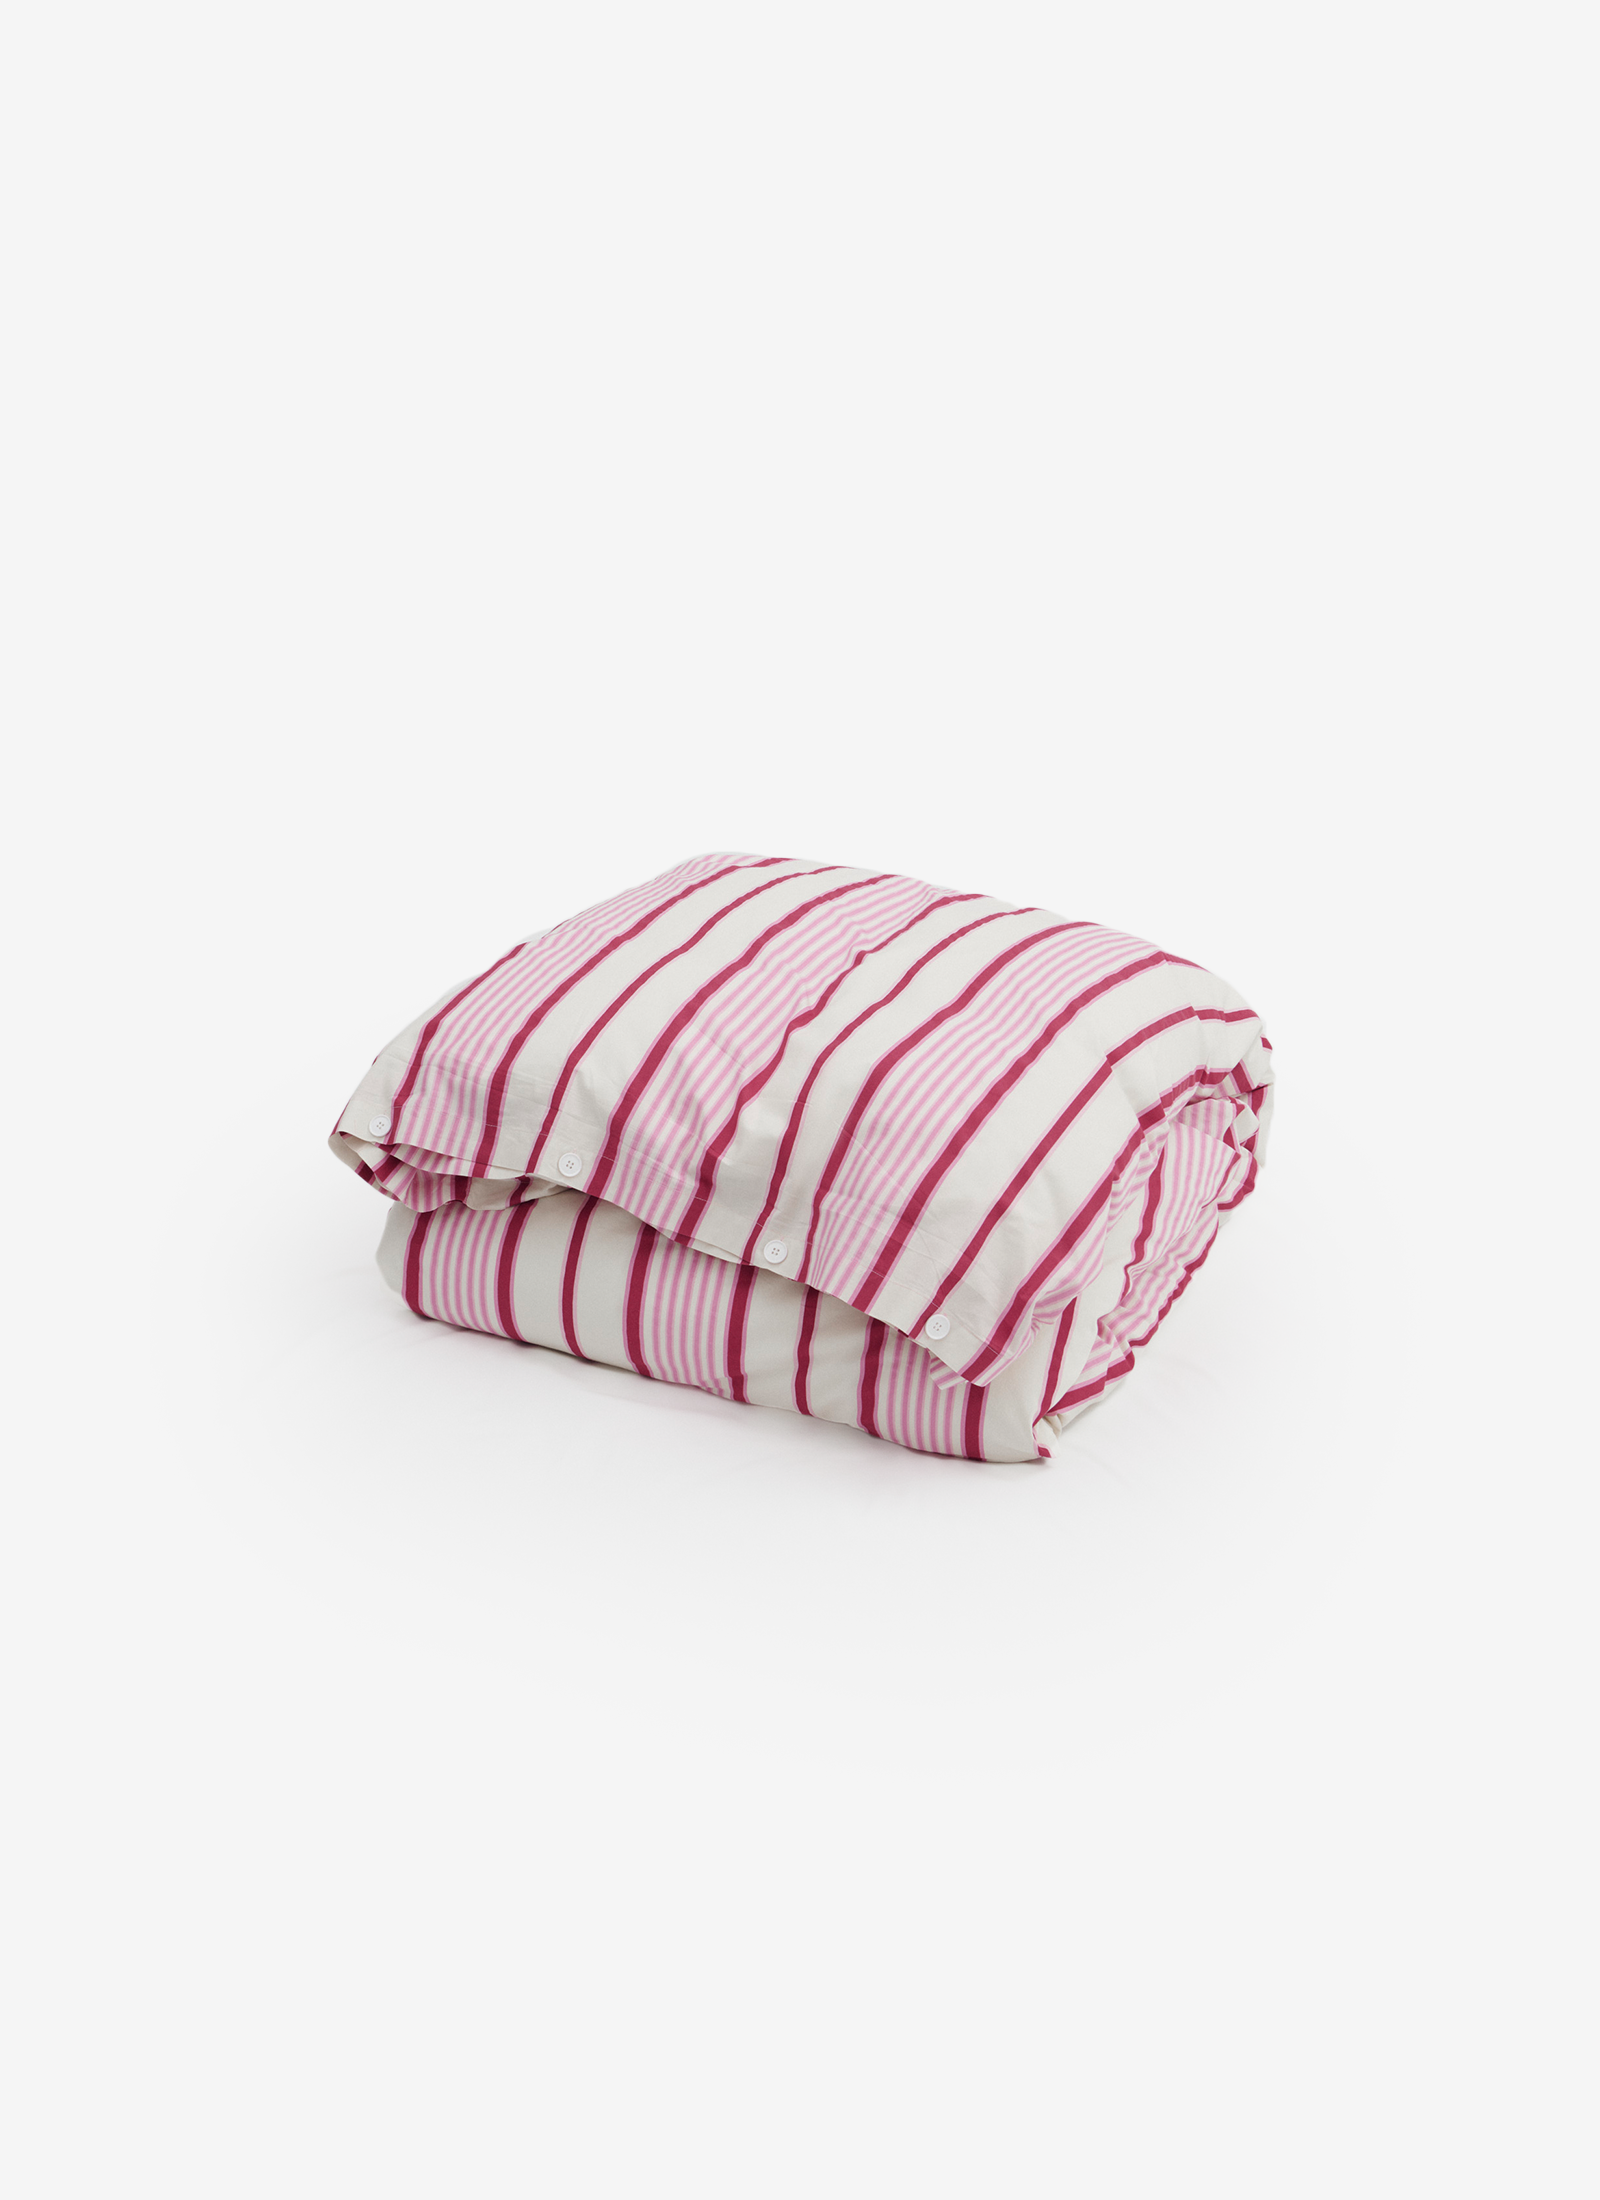 Duvet Cover in Pink Mattress Stripes